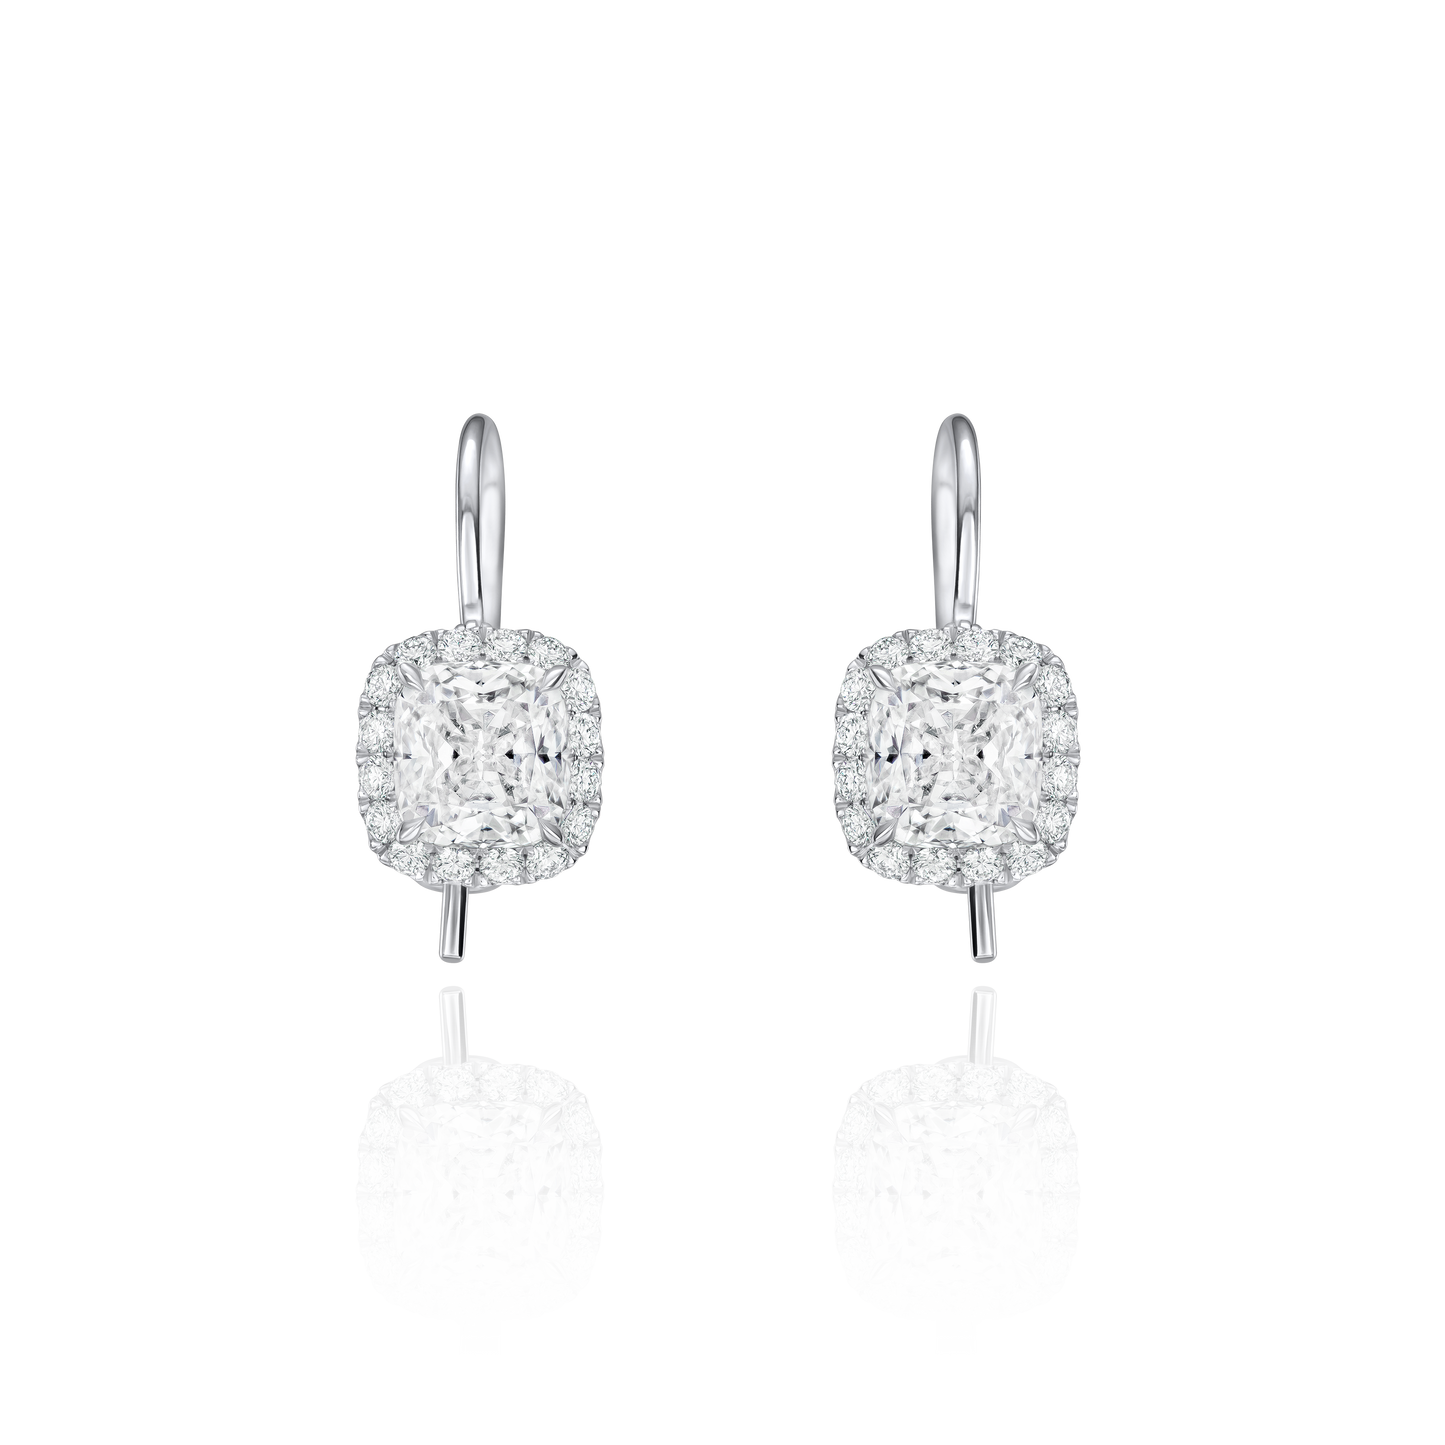 2.17cts Cushion Cut Diamond Cluster Drop Earrings